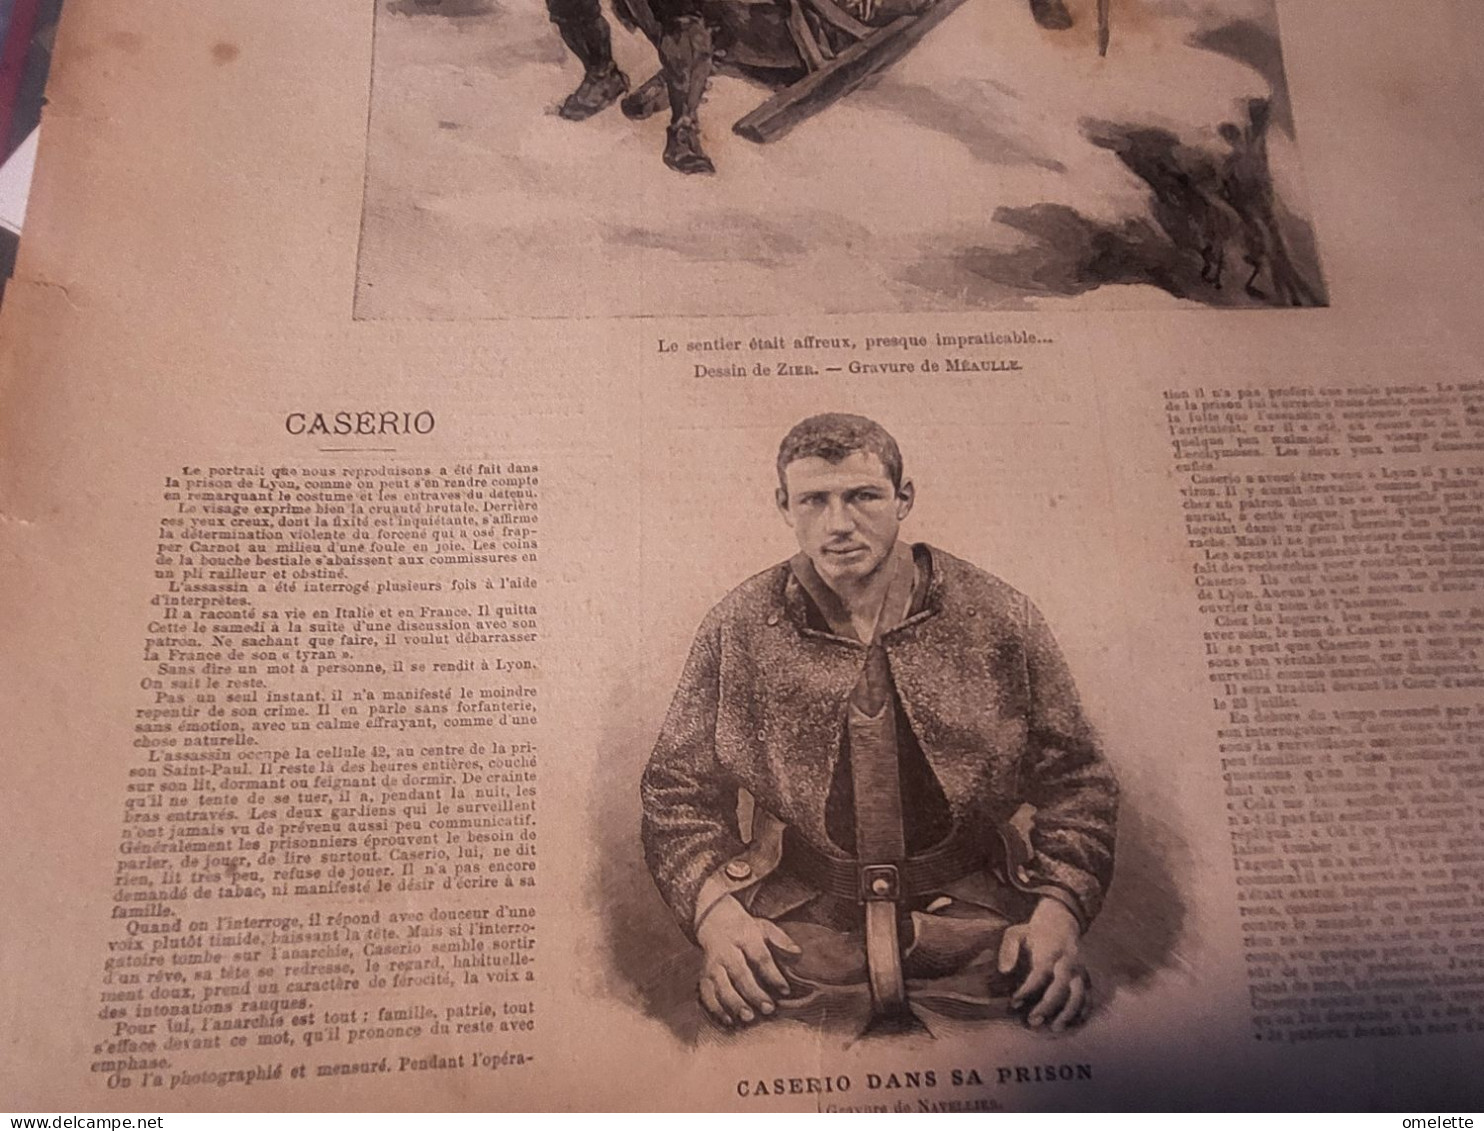 JOURNAL ILLUSTRE 94 / FORTERESSE DE GLATZ /CASERIO - Magazines - Before 1900